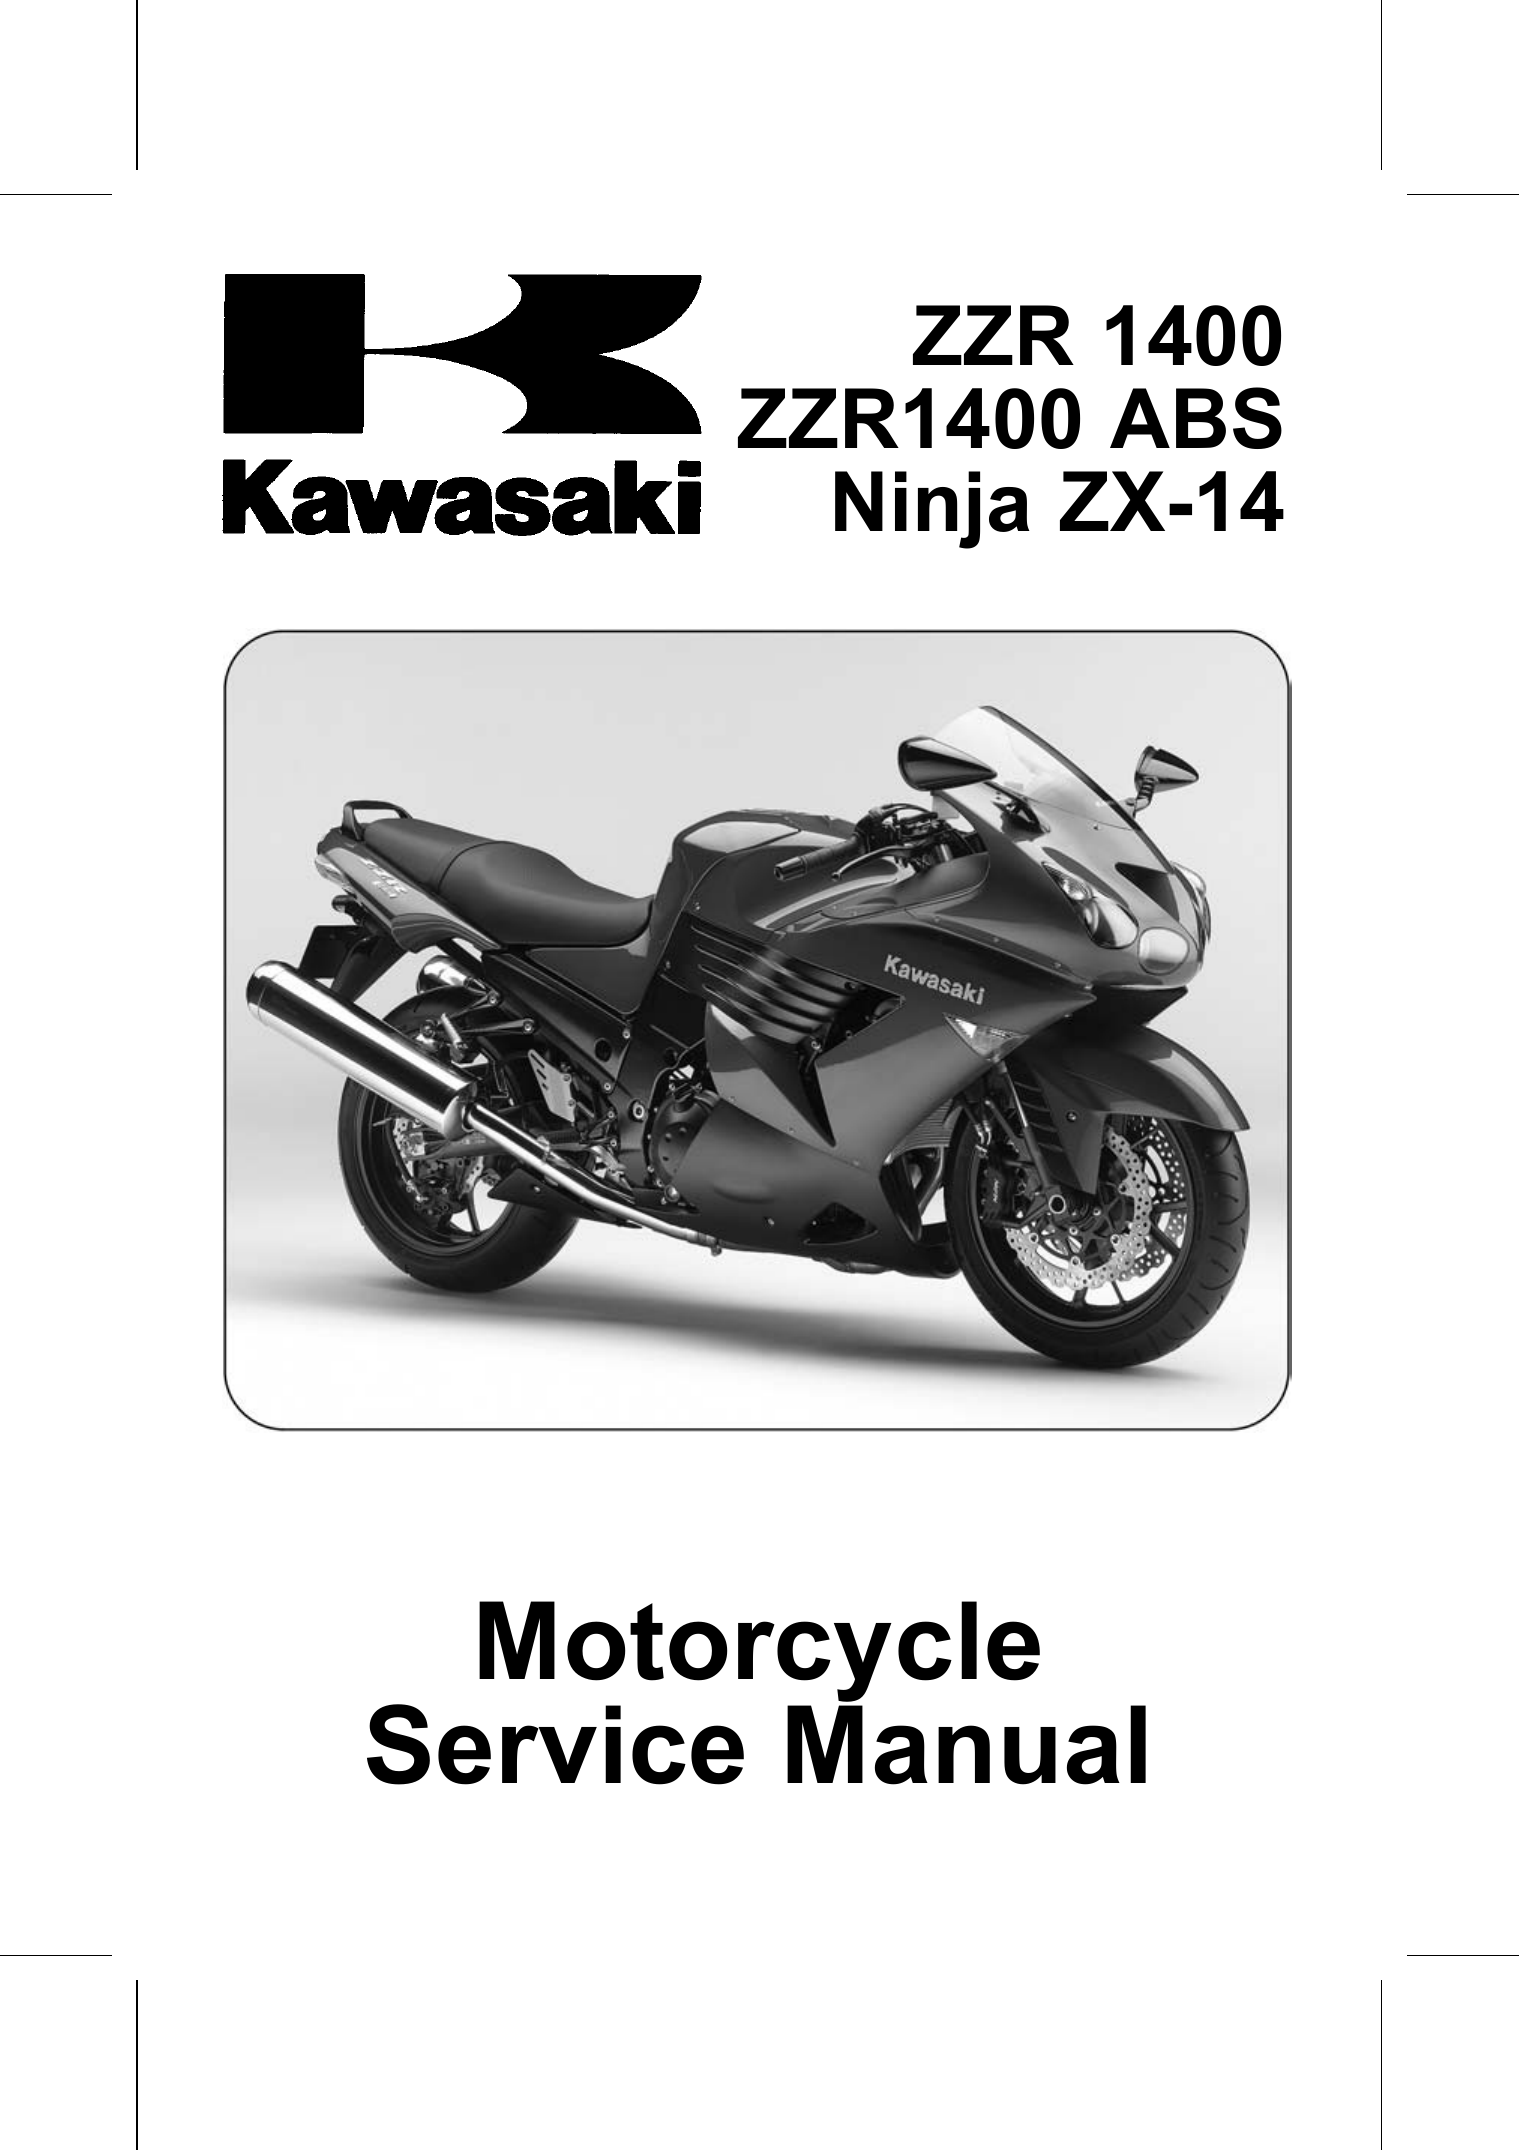 2006-2007 Kawasaki Ninja ZX-14, ZZR1400 ABS ZZR 1400 service, shop manual Preview image 1